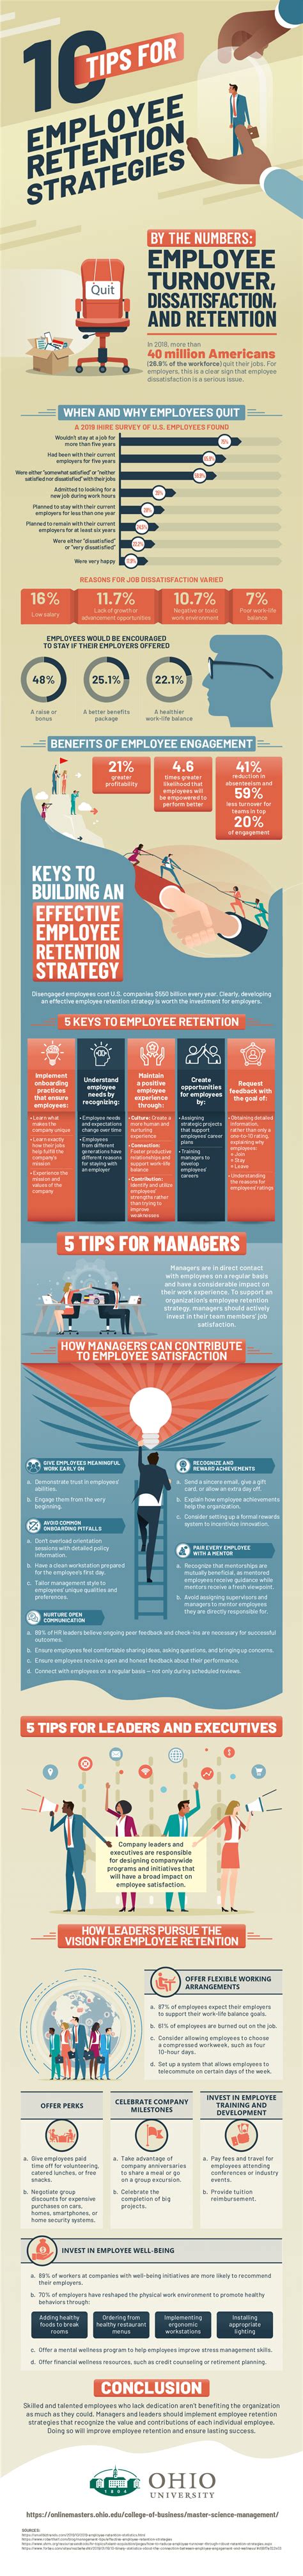 10 Tips For Employee Retention Strategies Ohio University